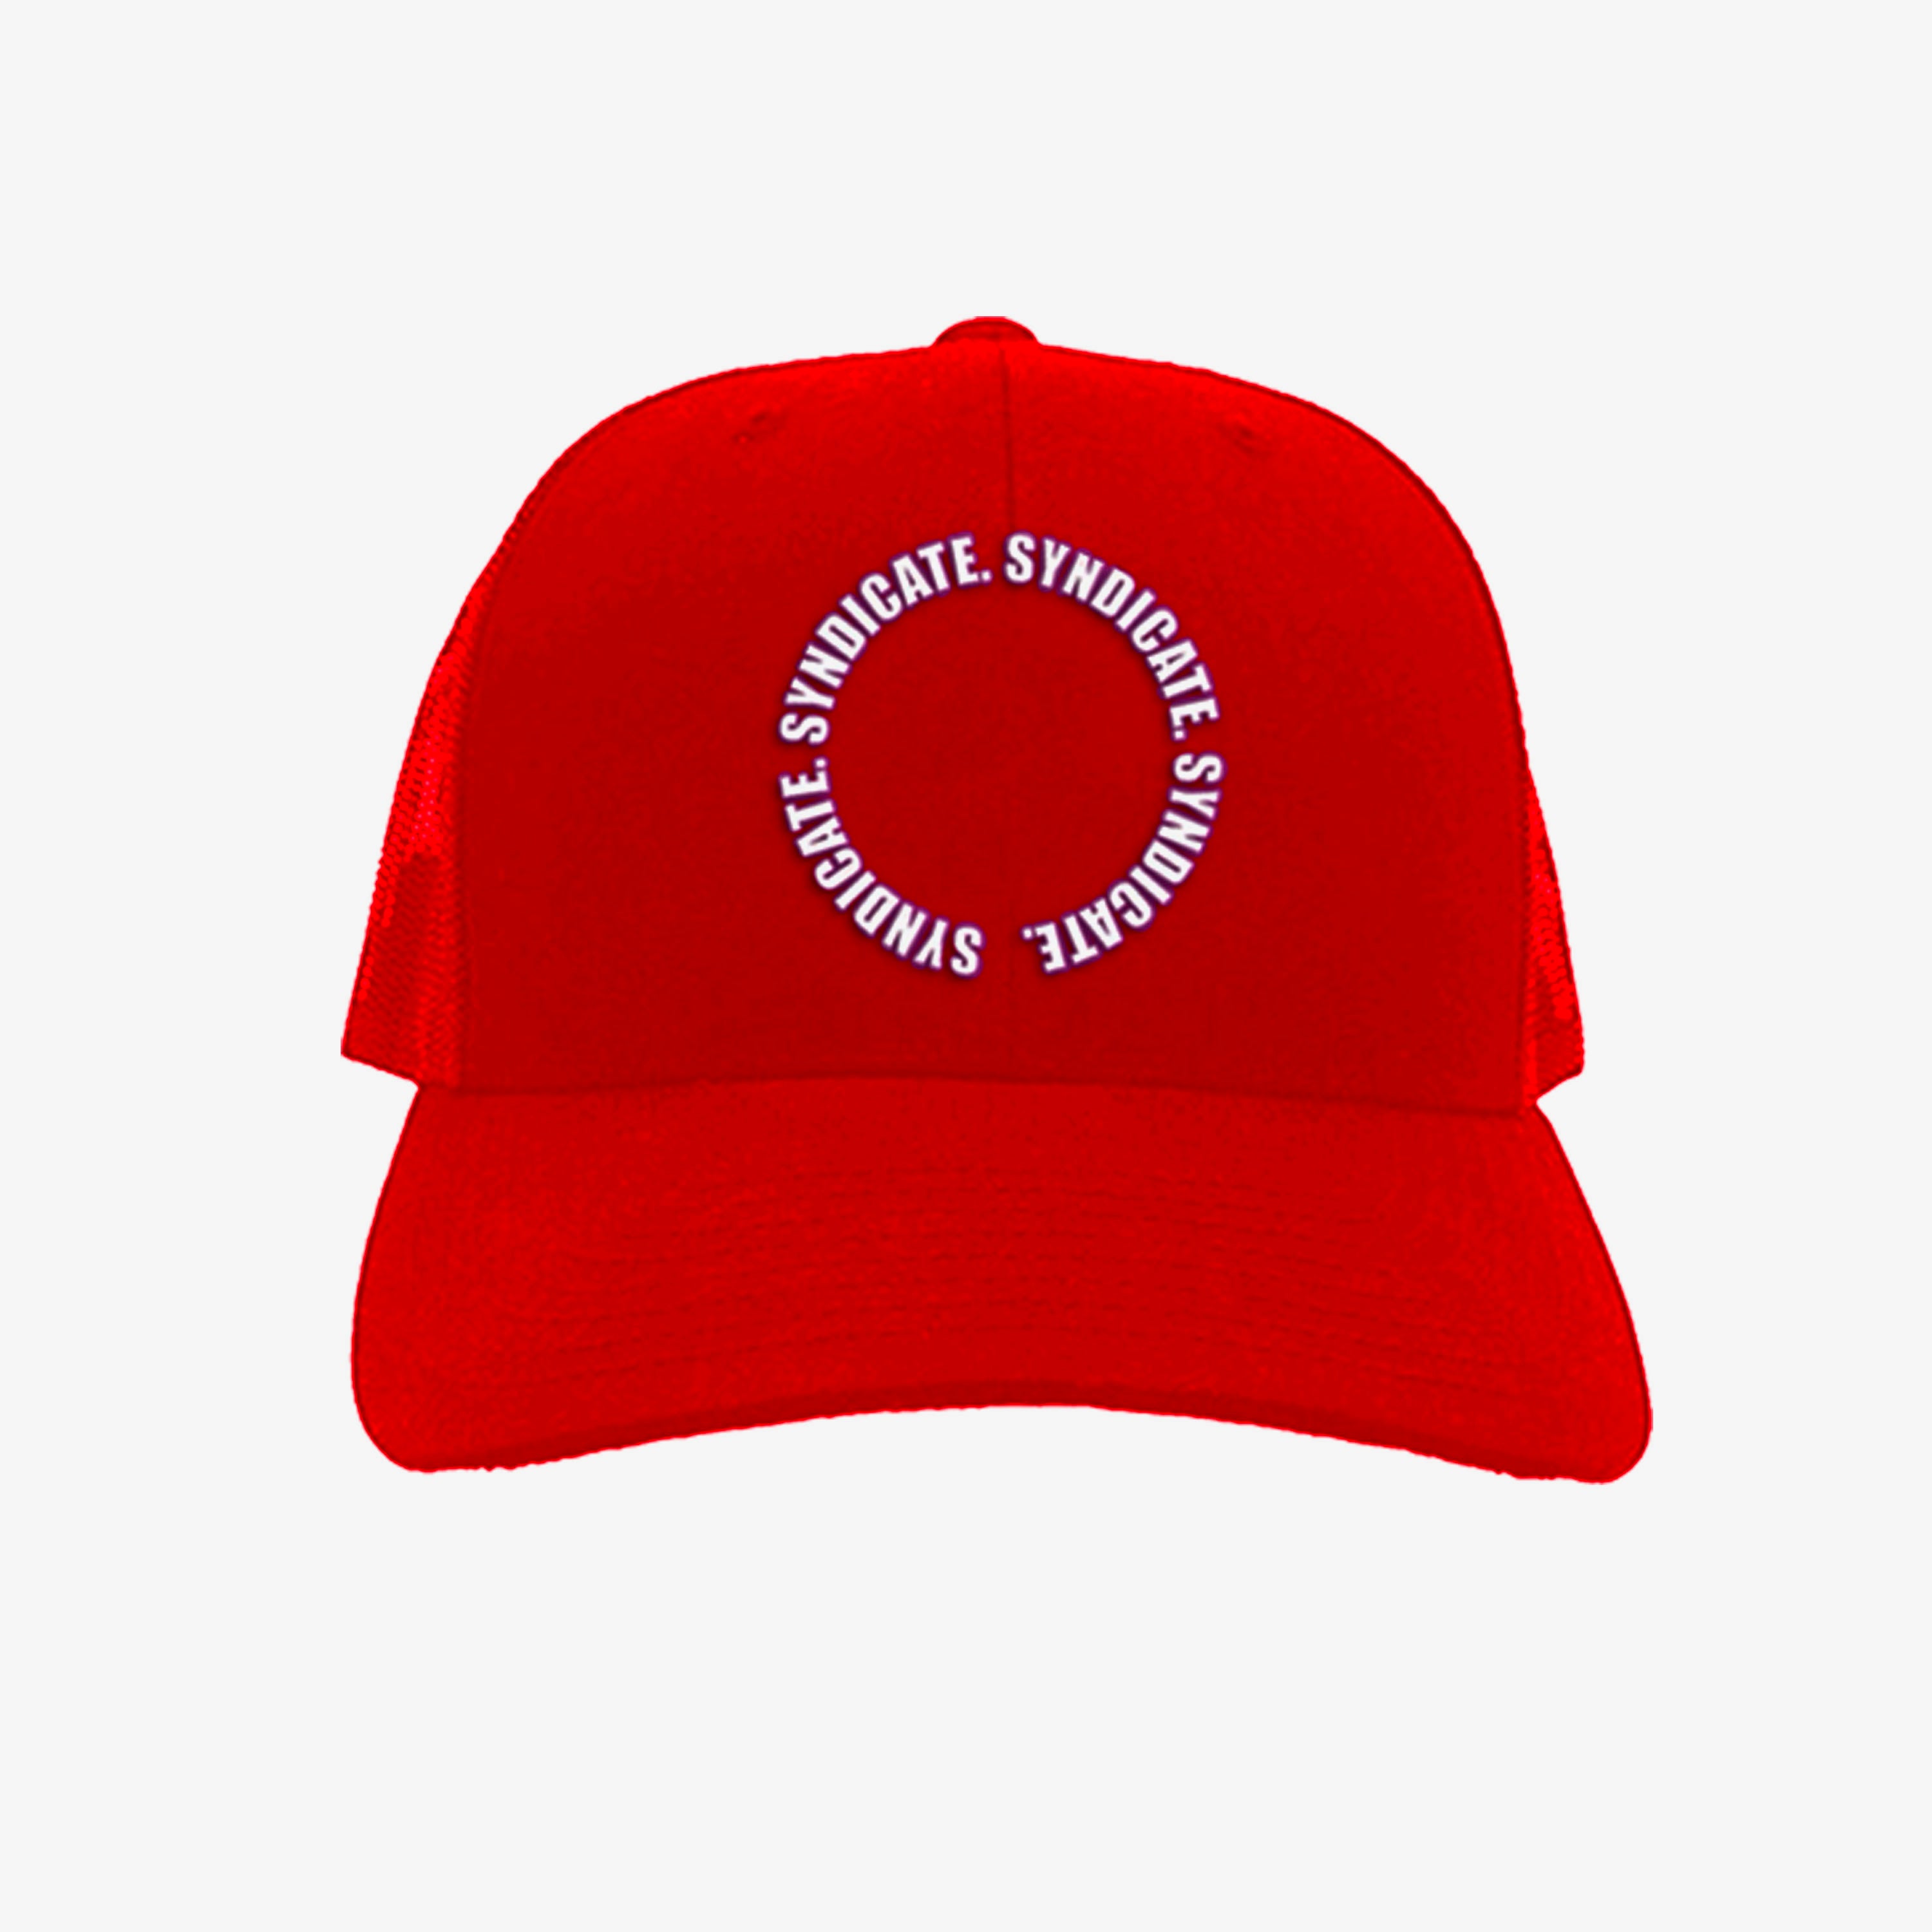 Circle syndicate red & white hat